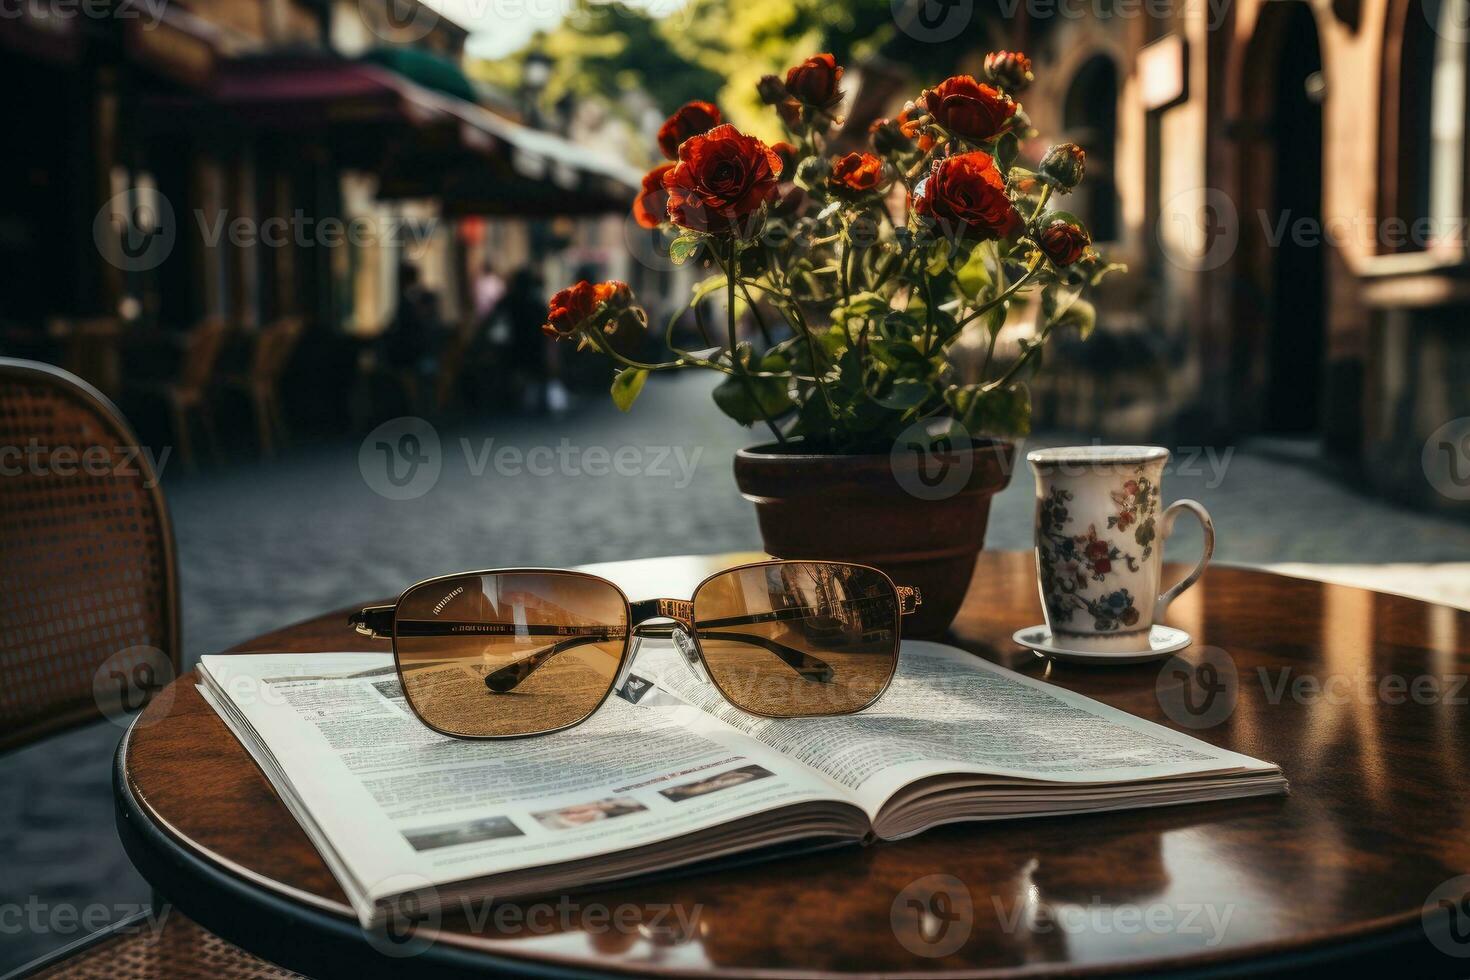 Magazines on table with eyeglasses. photo